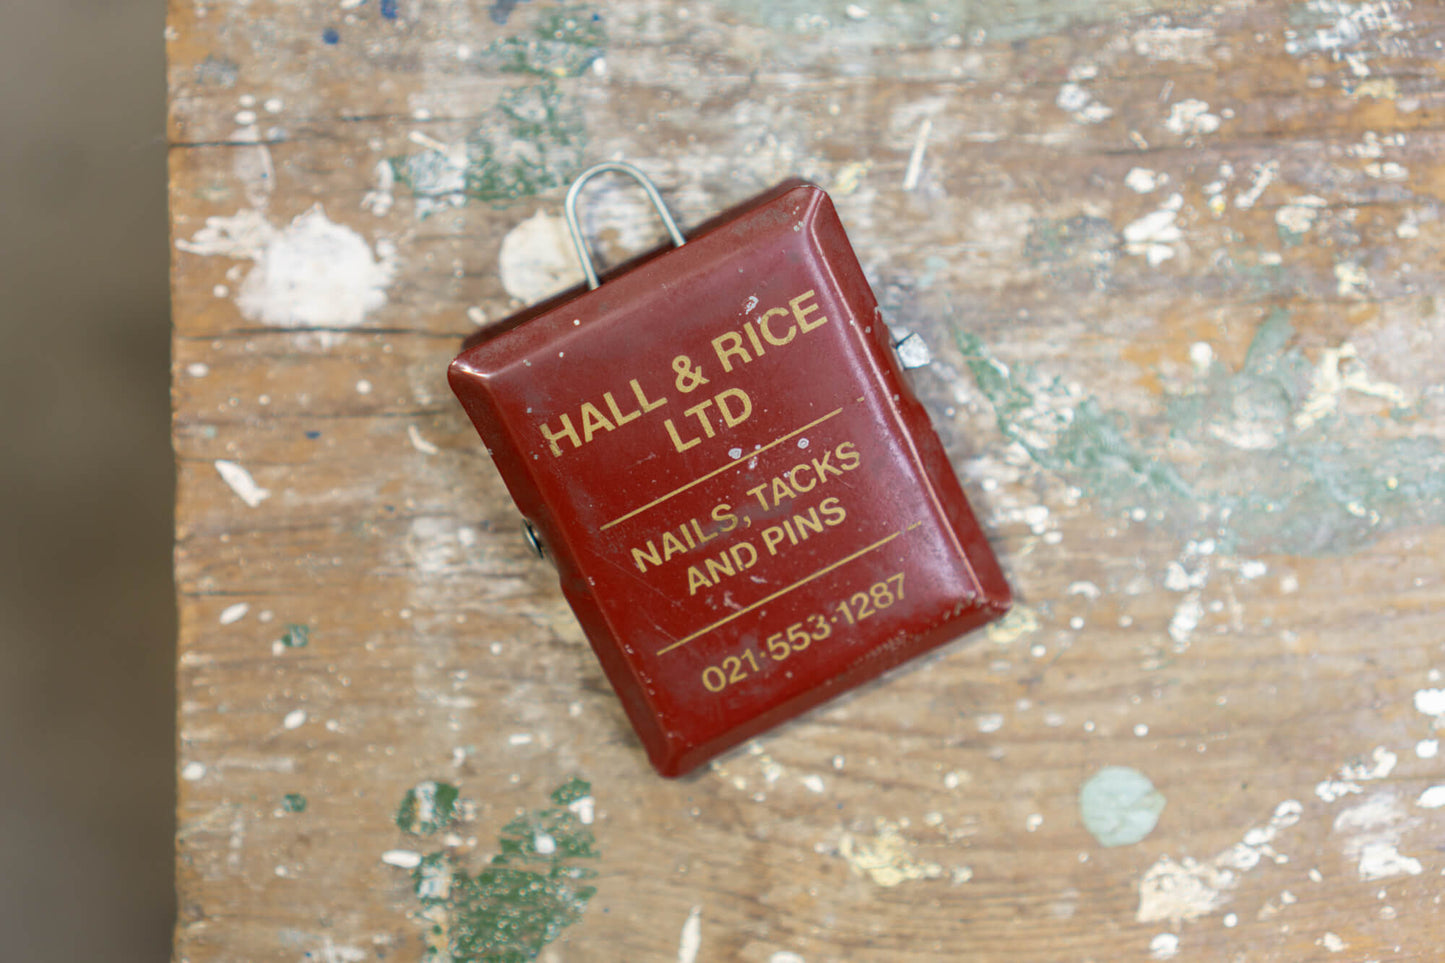 'Hall & Rice' Office Clip